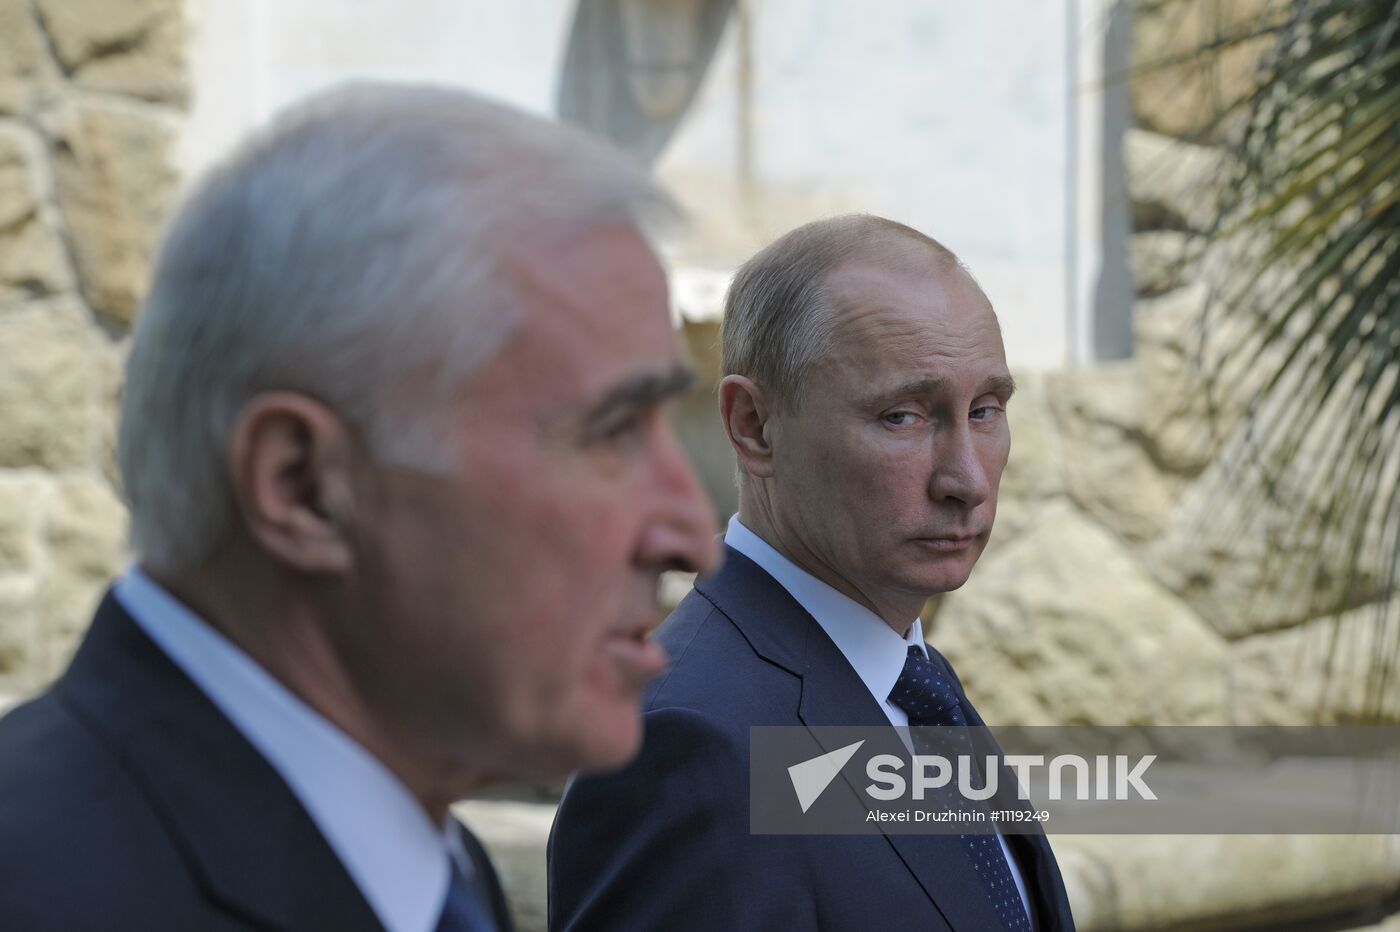 Vladimir Putin meets with Leonid Tibilov